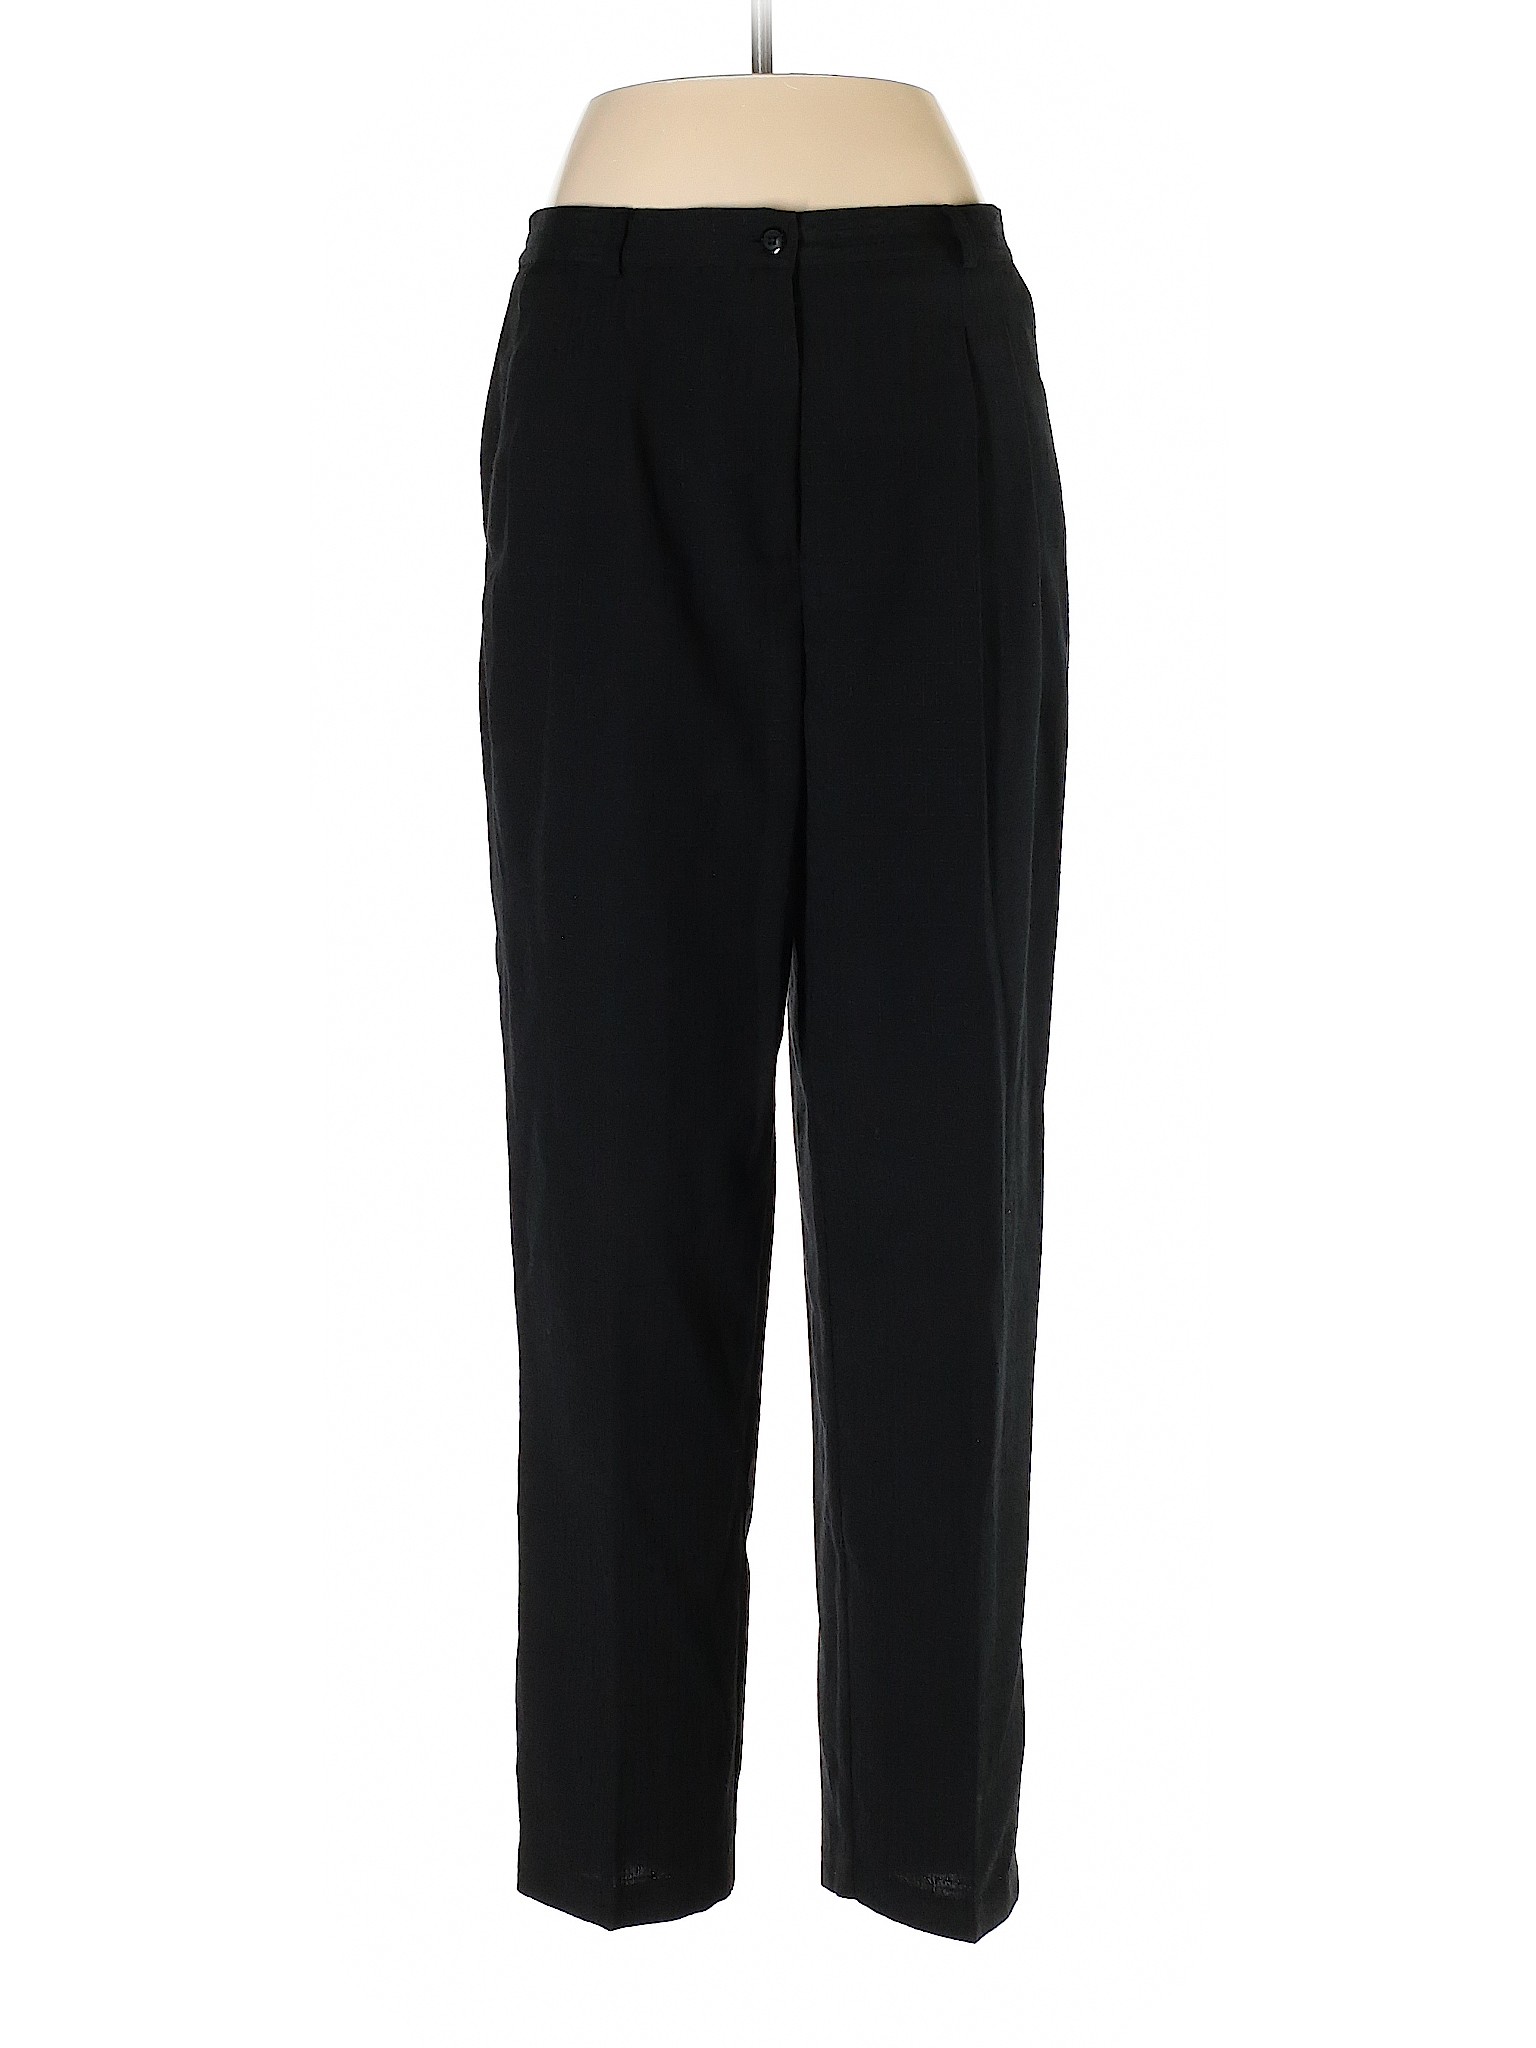 Studio Works Women Black Dress Pants 8 | eBay